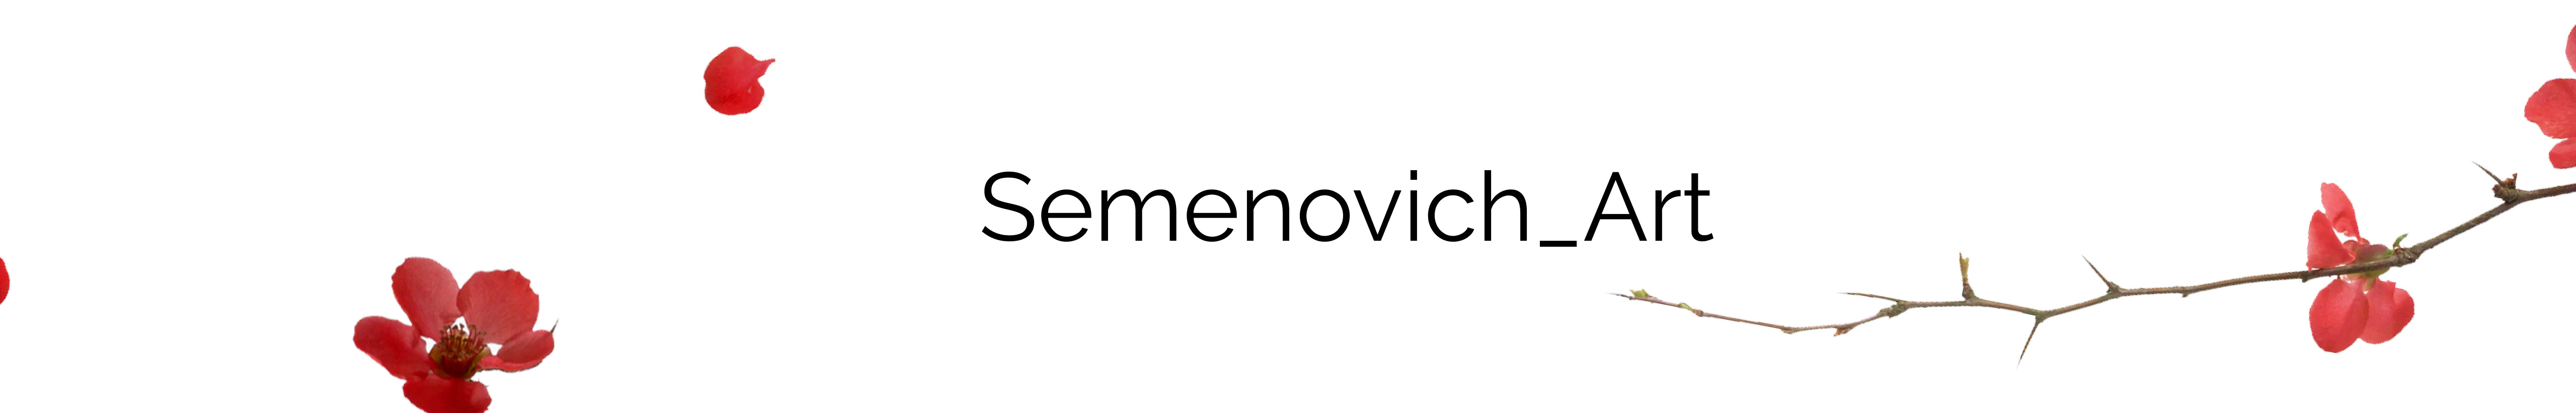 Banner de perfil de Julia Semenovich